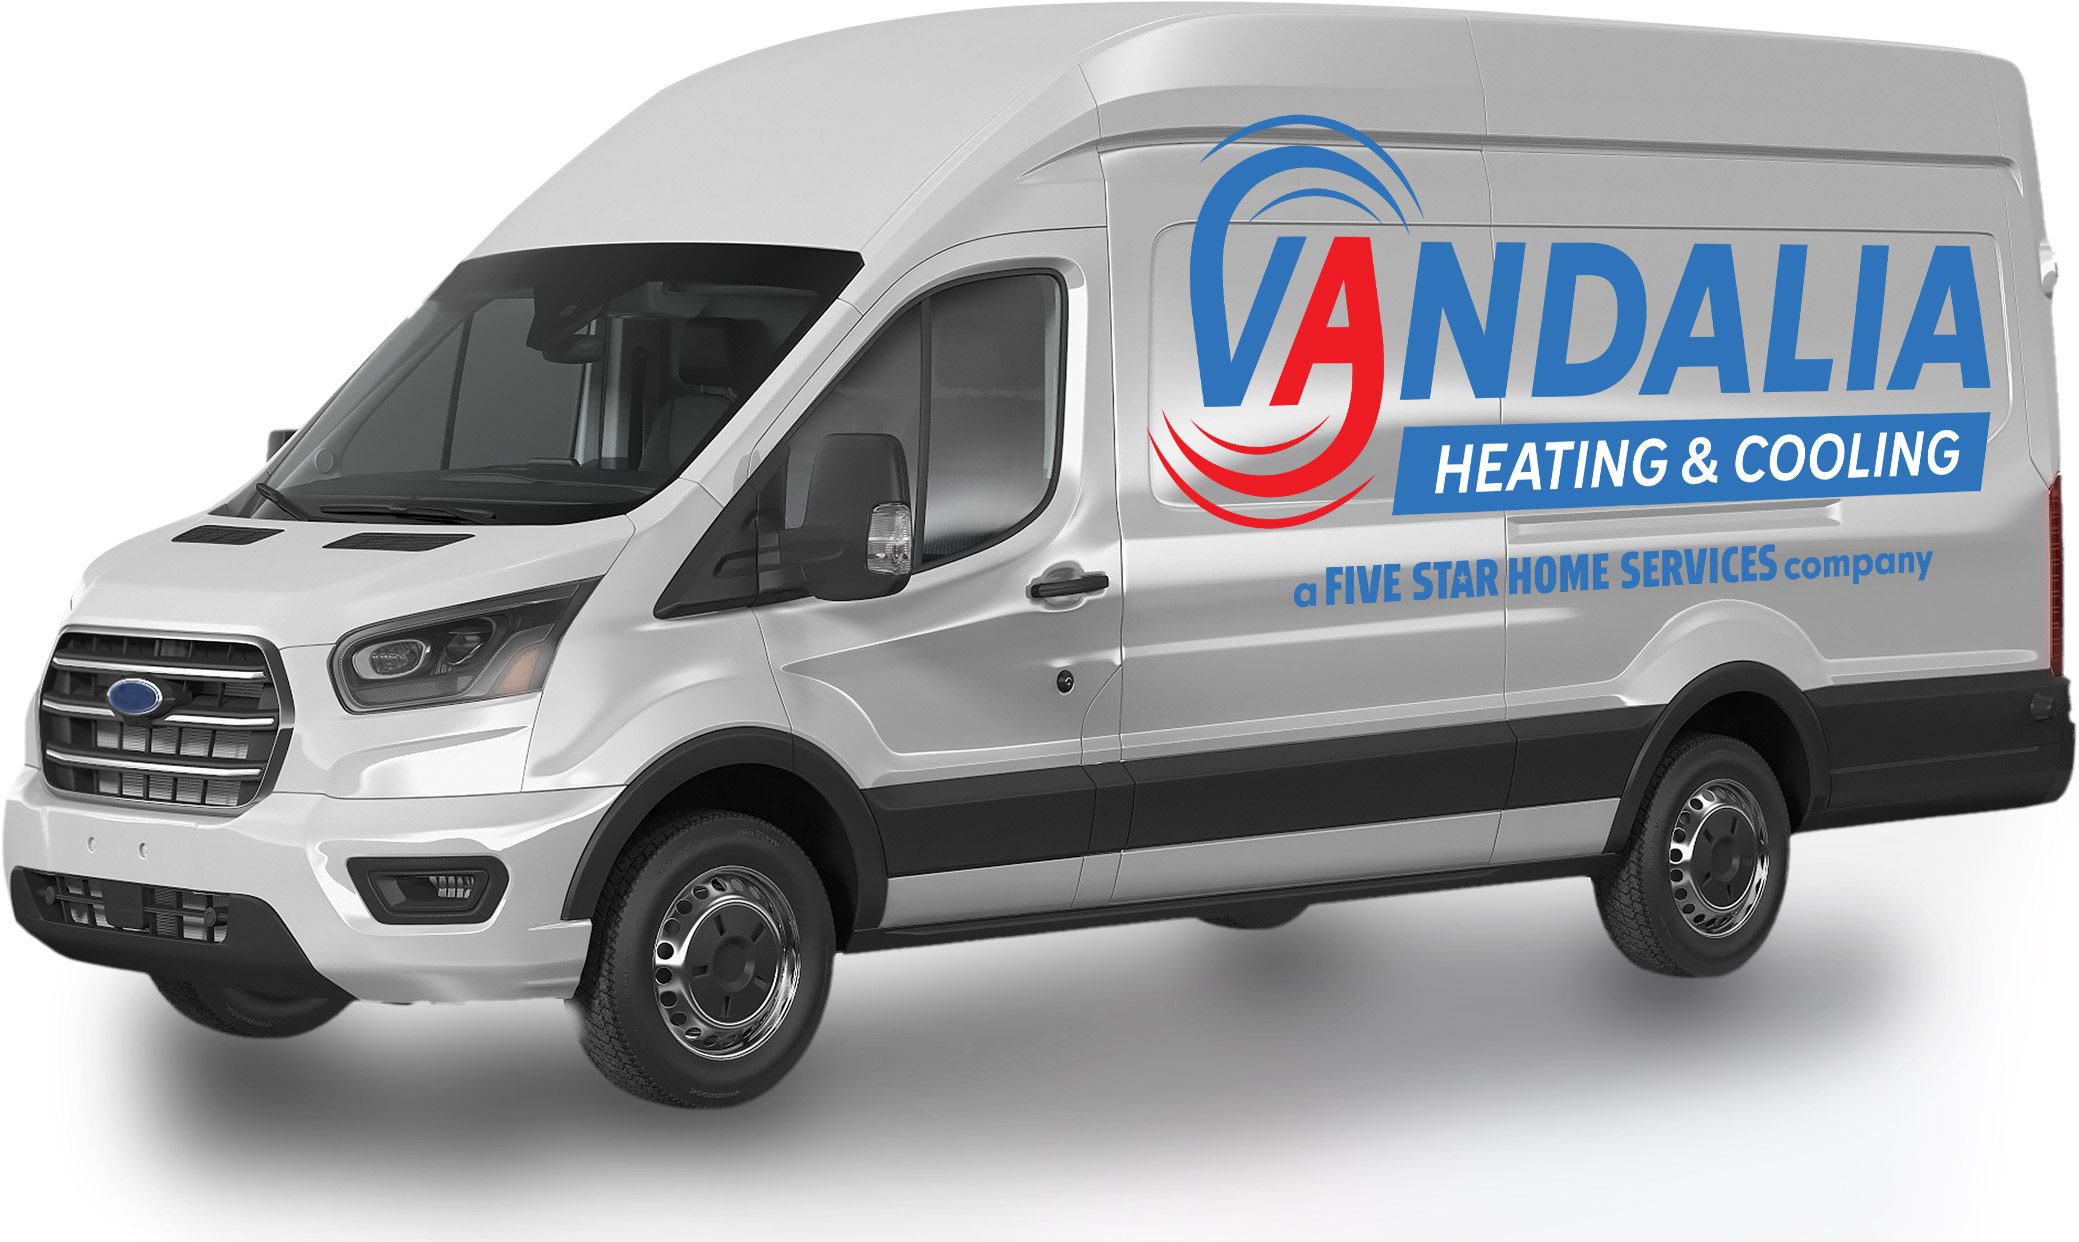 Vandalia Heating & Cooling